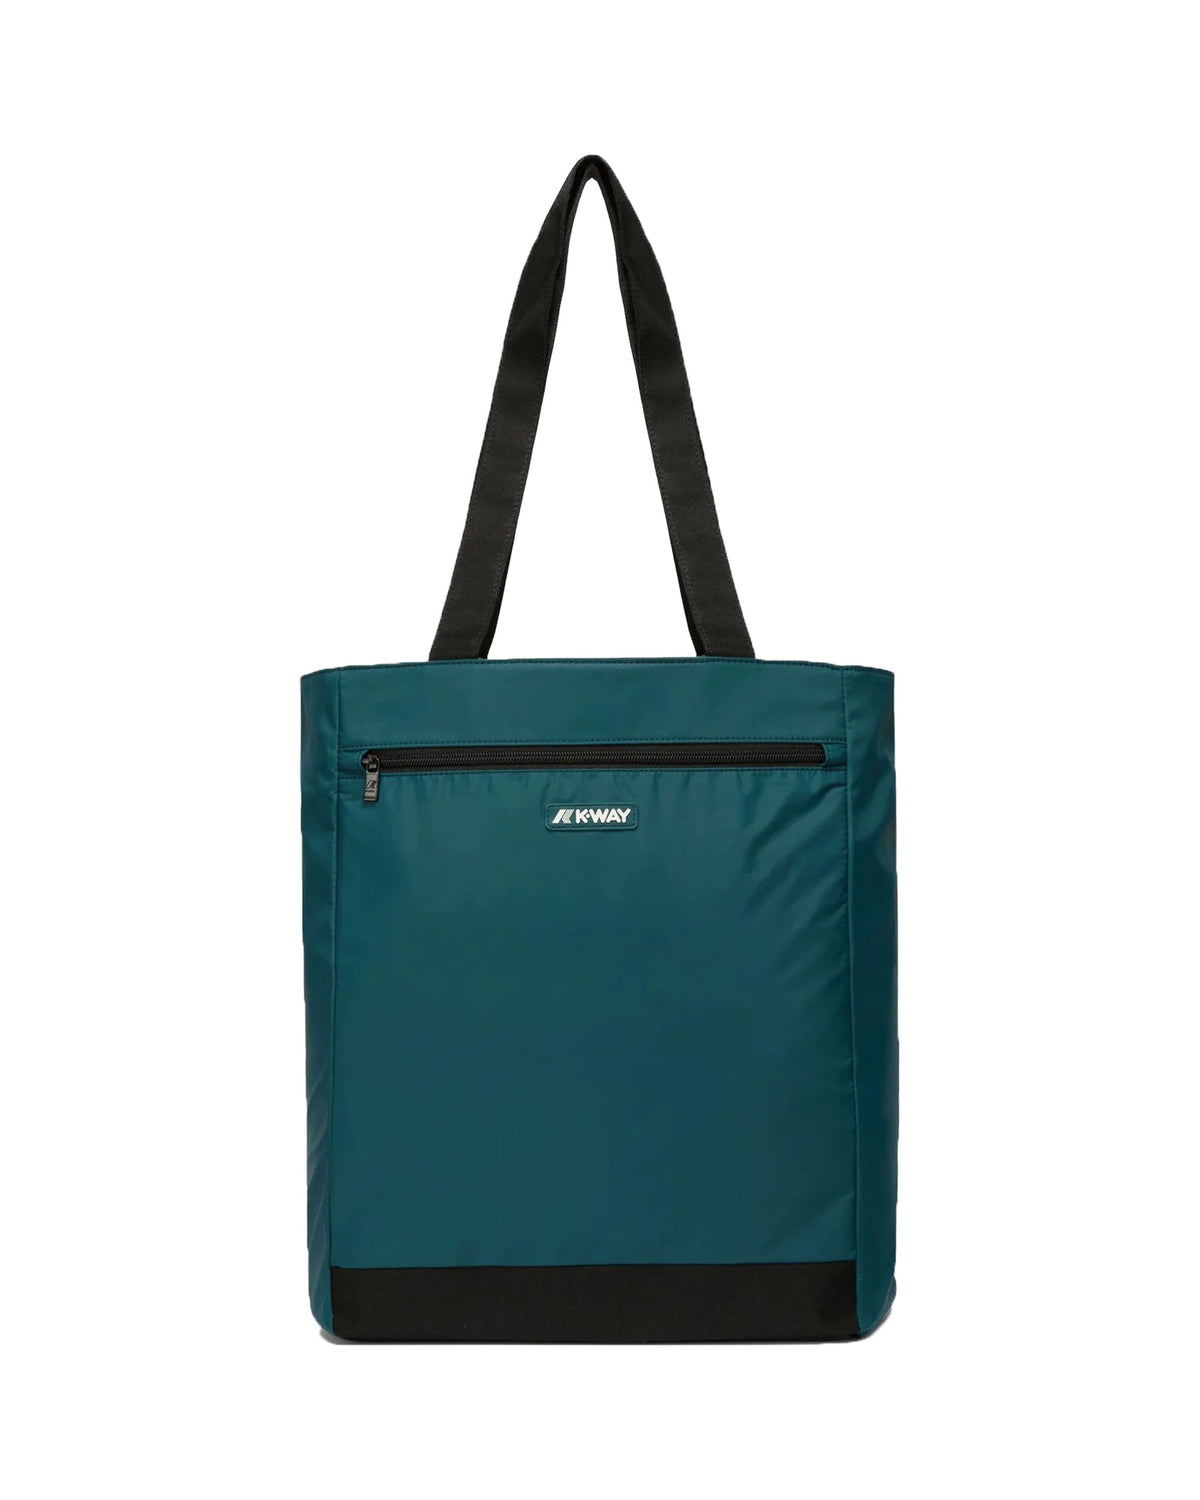 Woman's Shopping Bag K-Way Elliant Green